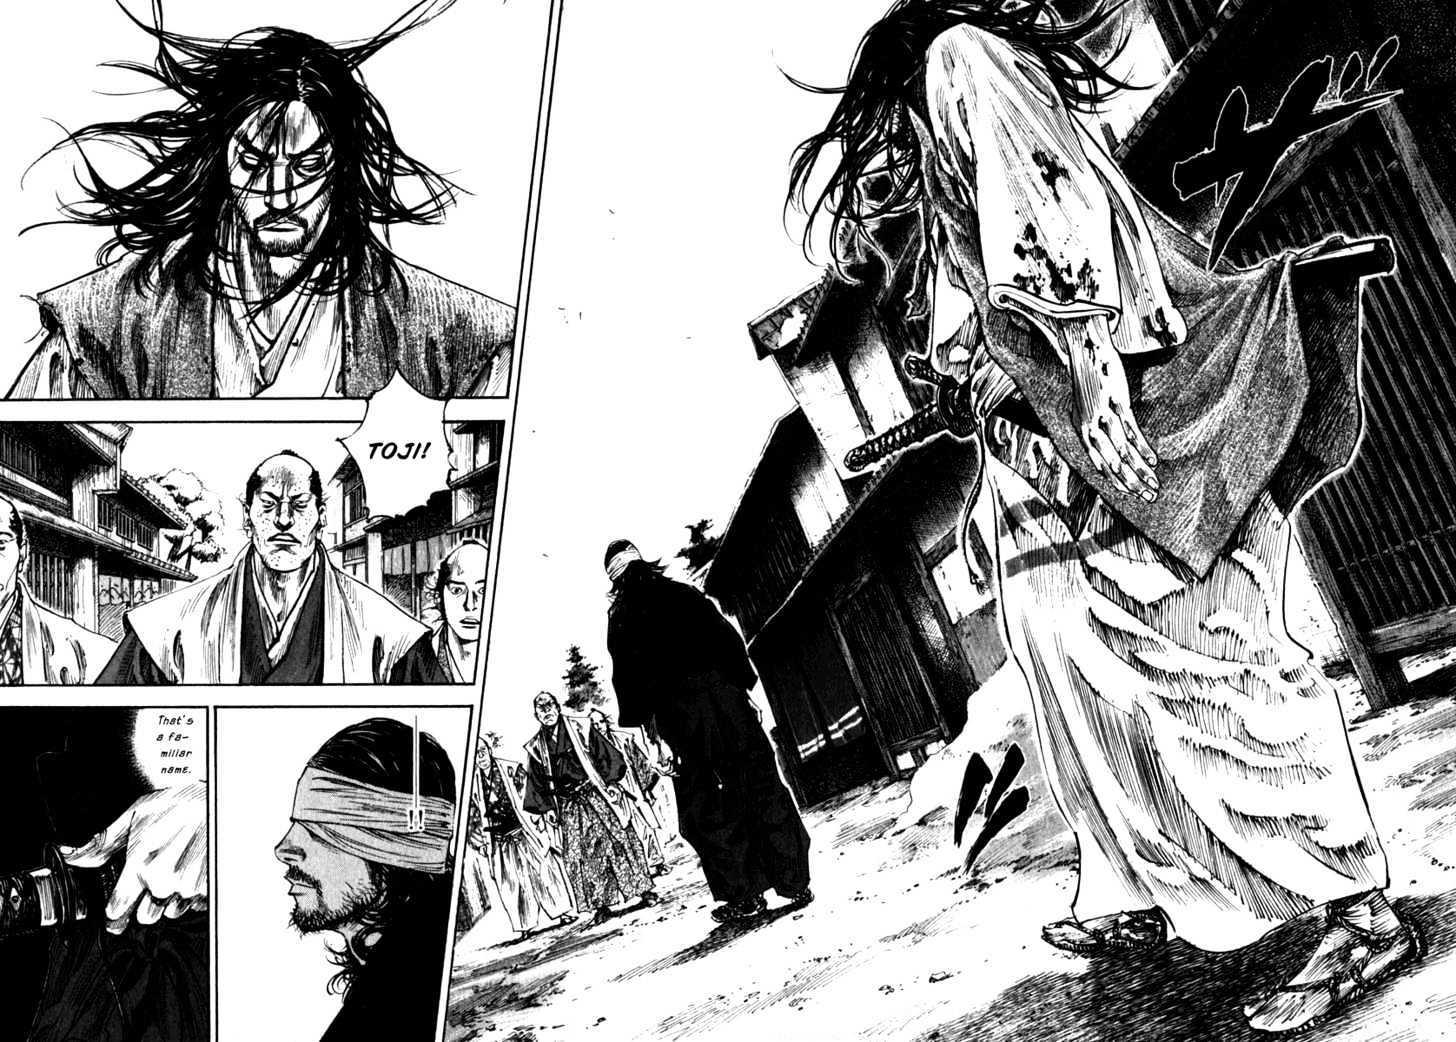 Vagabond Vol.22 Chapter 196 : The Devil Has Come page 4 - Mangakakalot